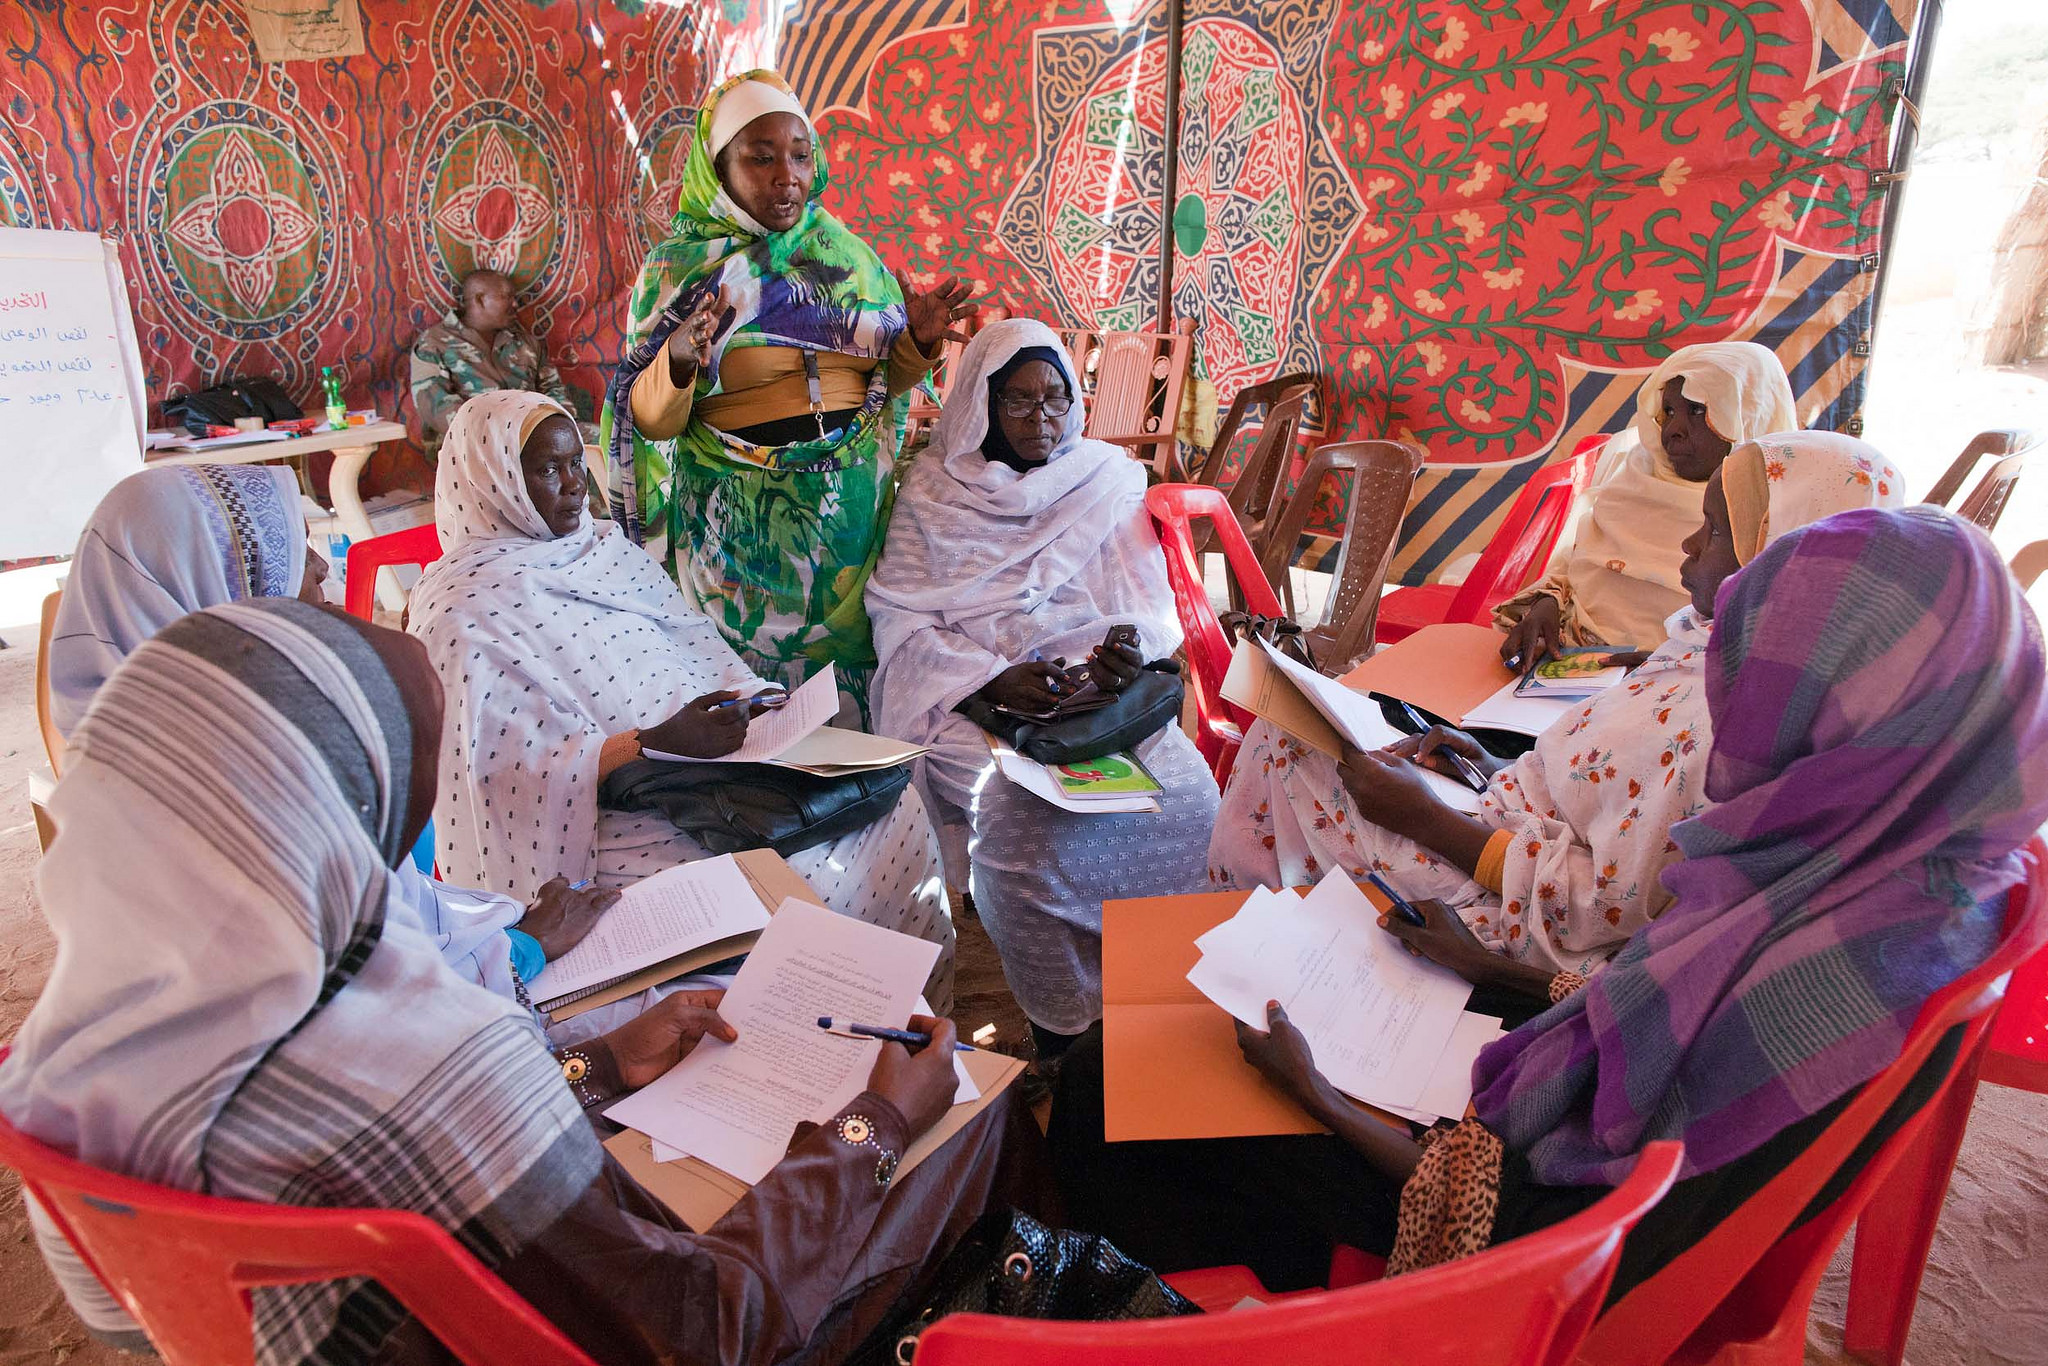 Women attend a workshop on UN SCR 1325 on Women, Peace and Security - Malha, North Darfur (Sojoud Elgarrai/UNAMID/Flickr CC BY-NC-ND 2.0)